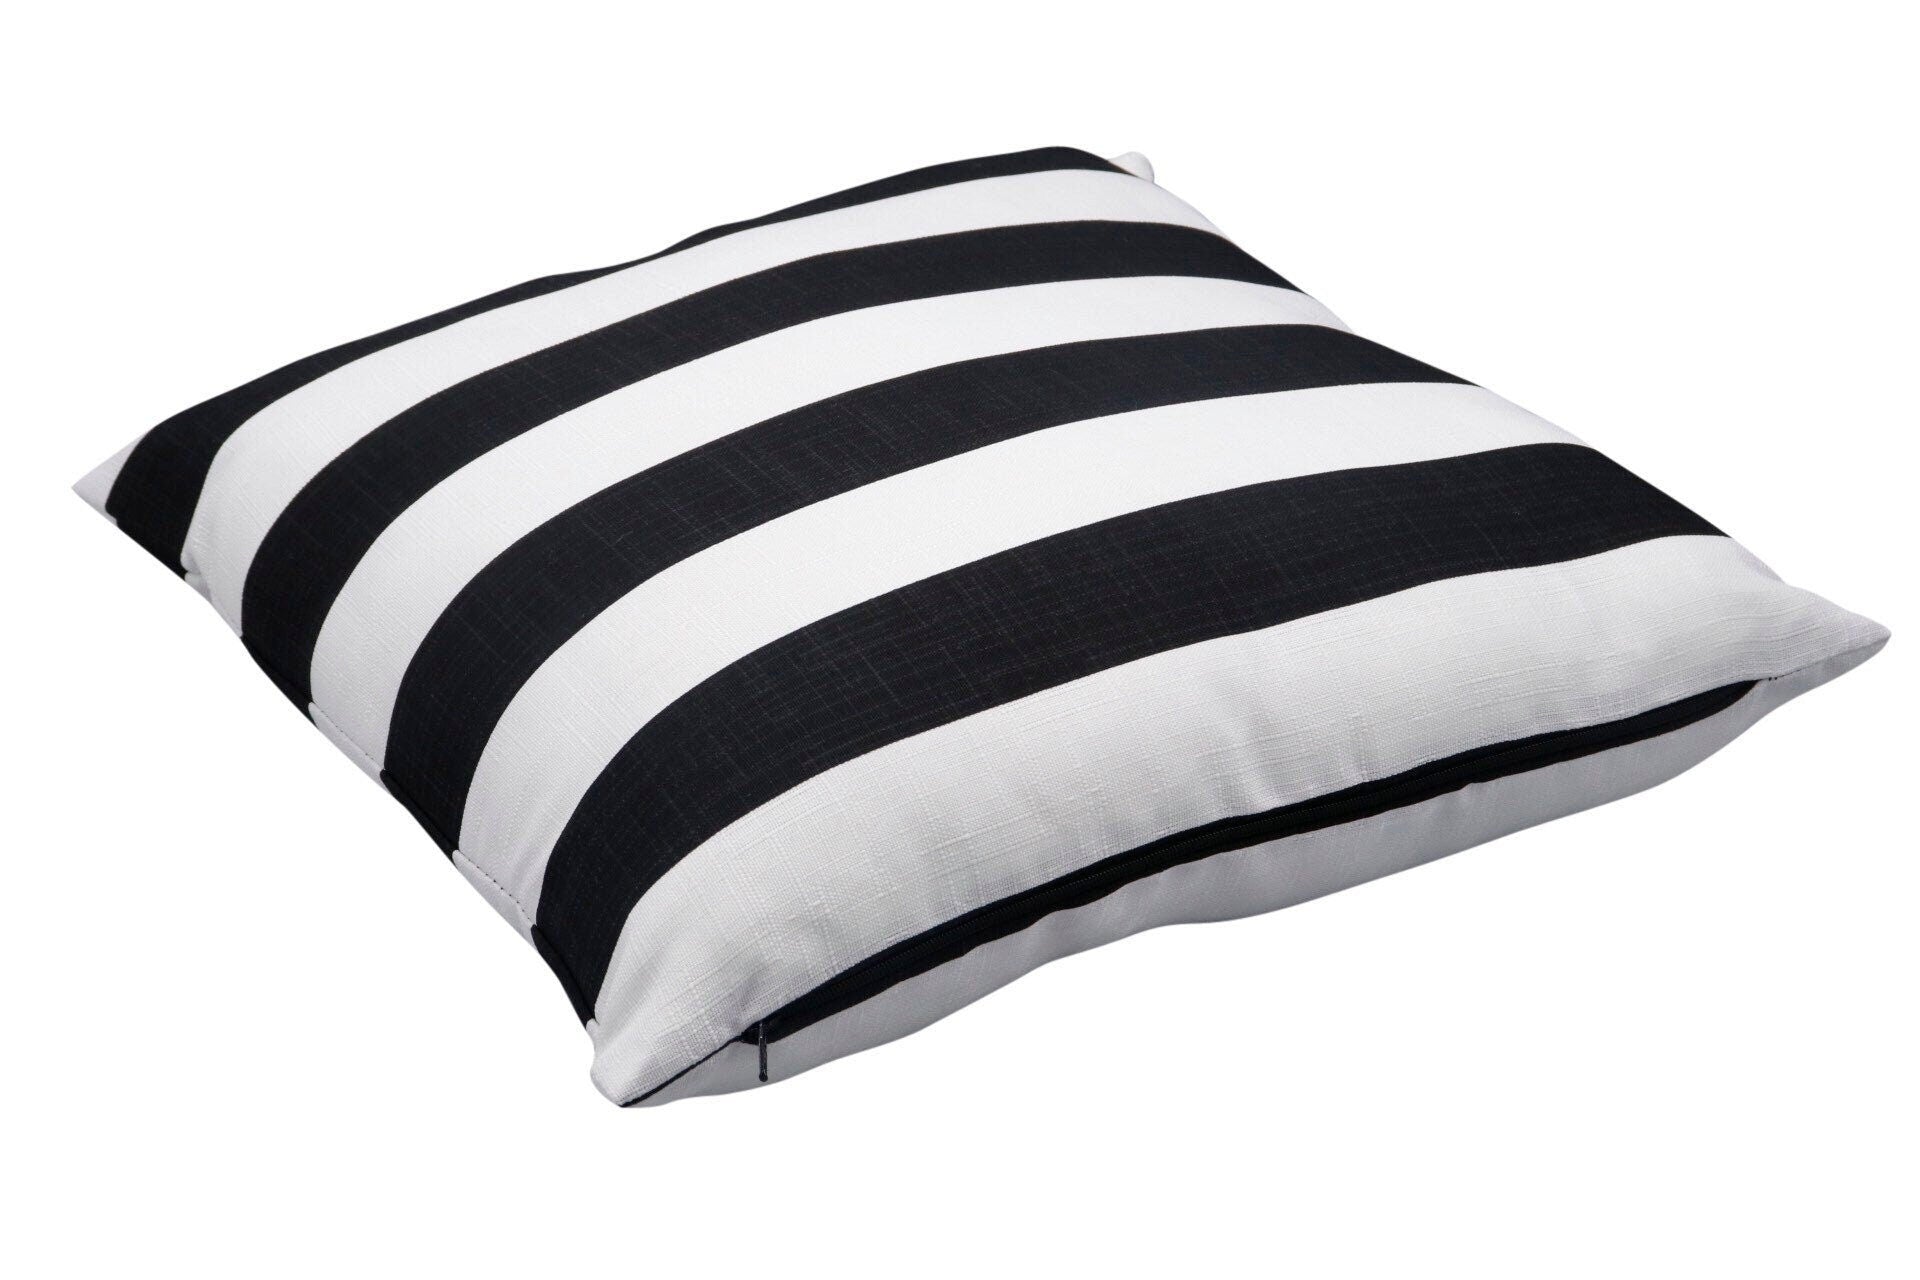 handmade artisan Black & White linen pillow 16 x 16” inches